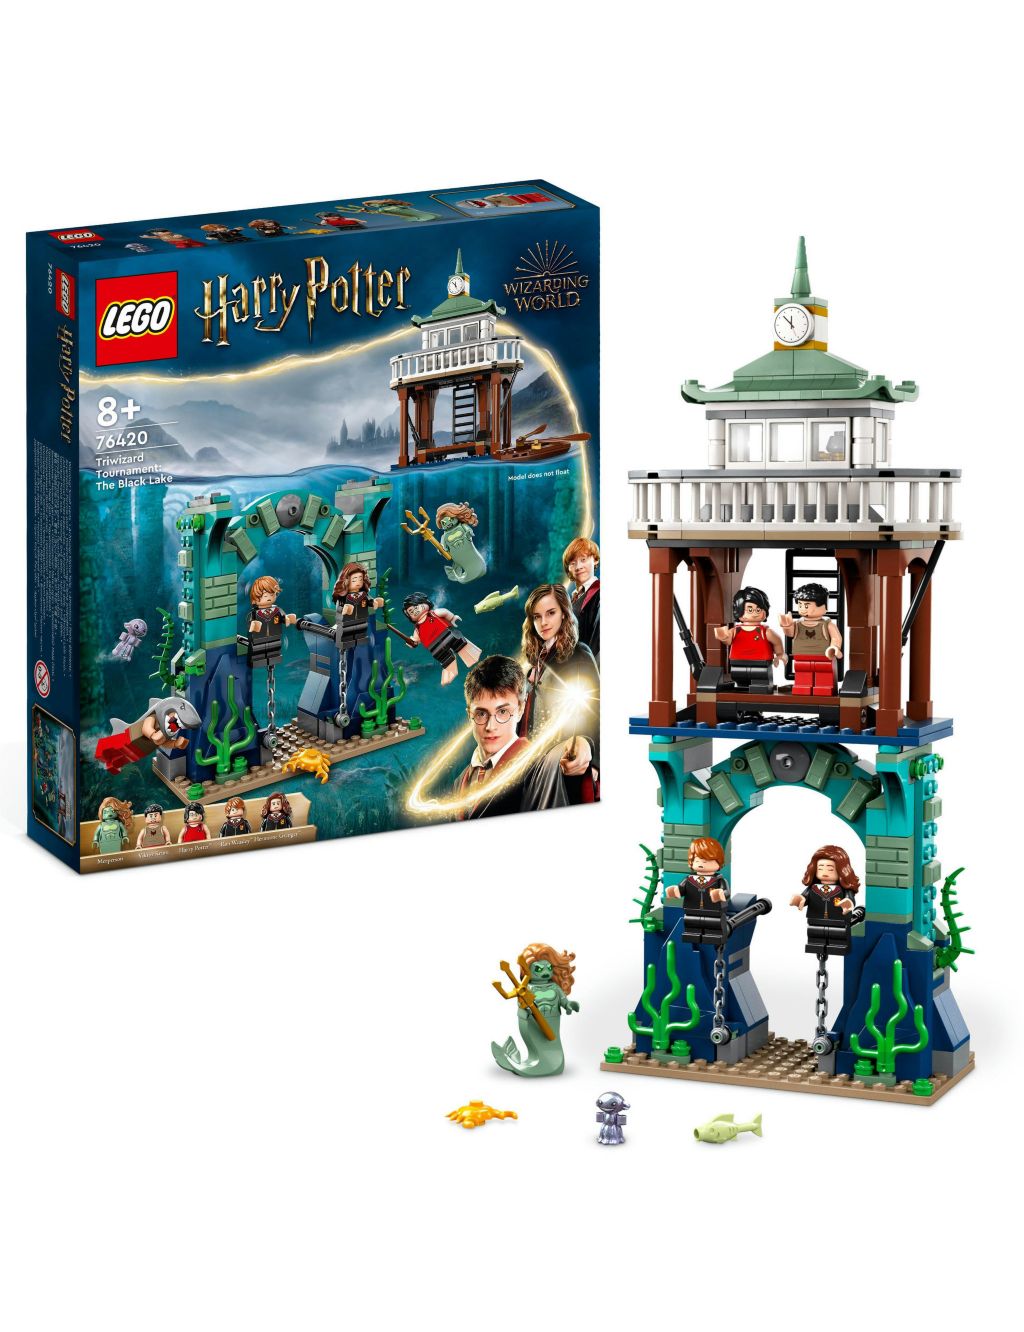 LEGO Harry Potter Triwizard Tournament: The Black Lake (8+ Yrs)